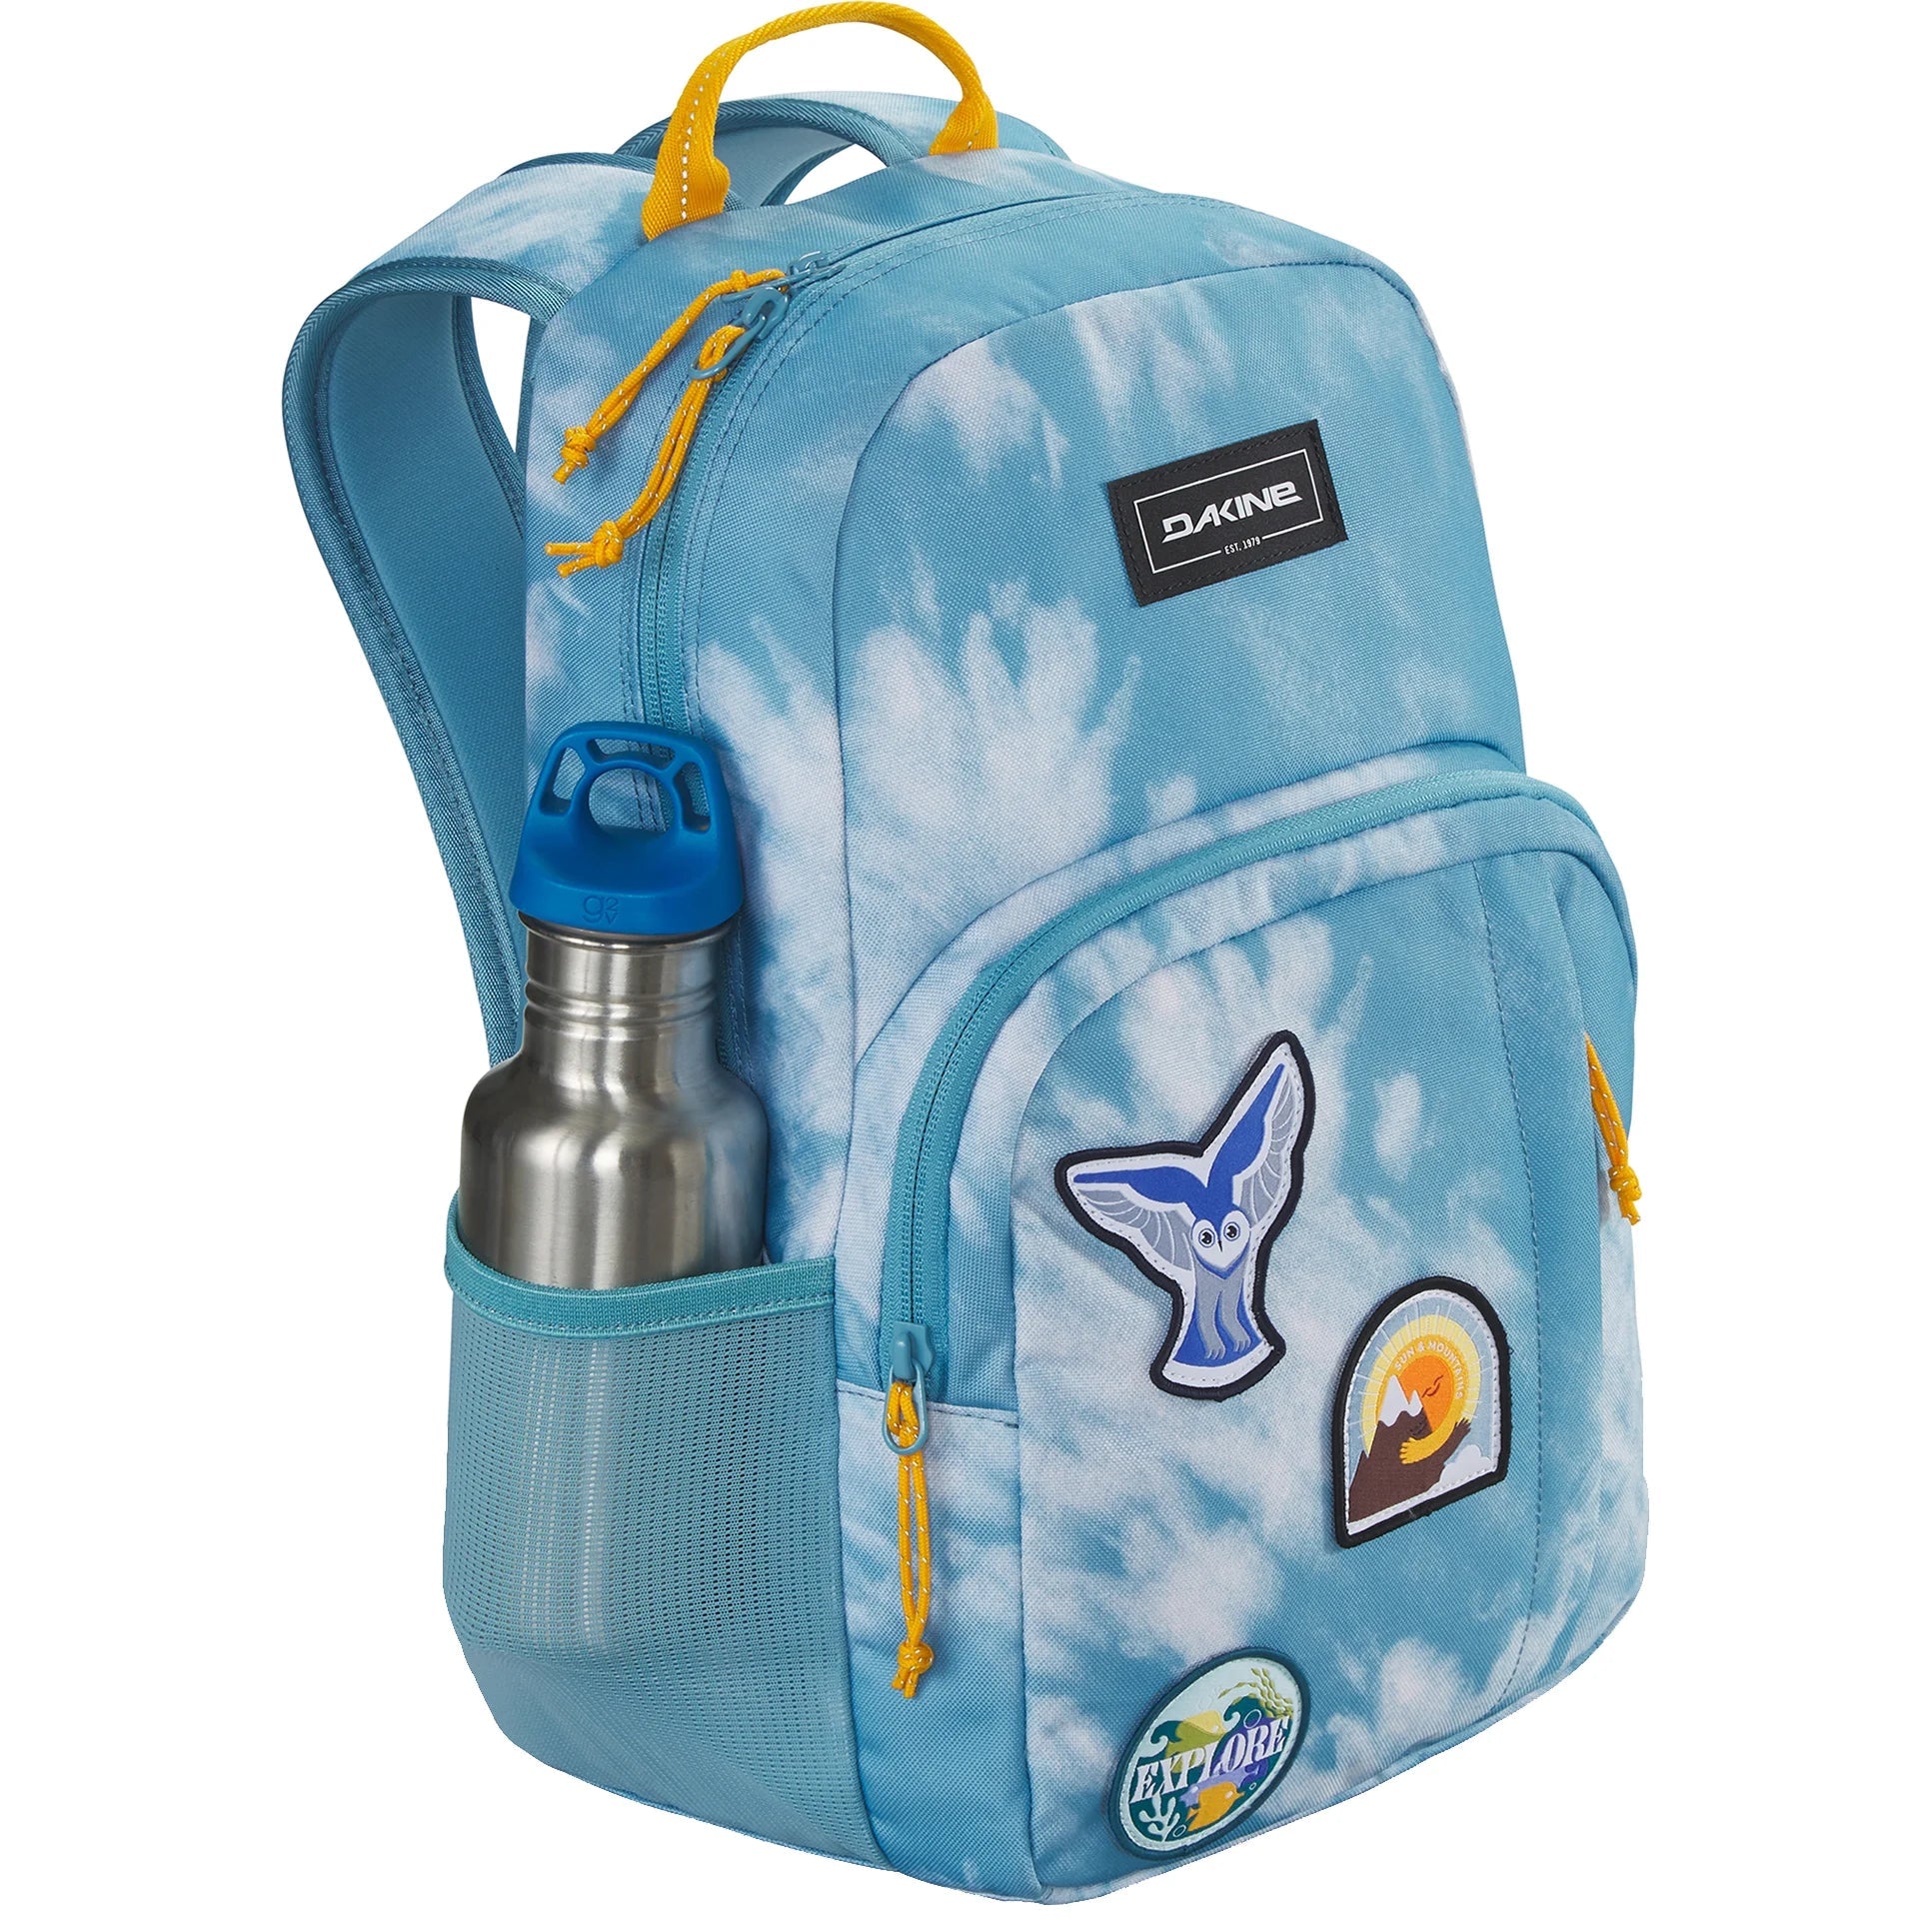 Dakine Packs & Bags Kids Campus 18L Backpack 41 cm - Deep Lake